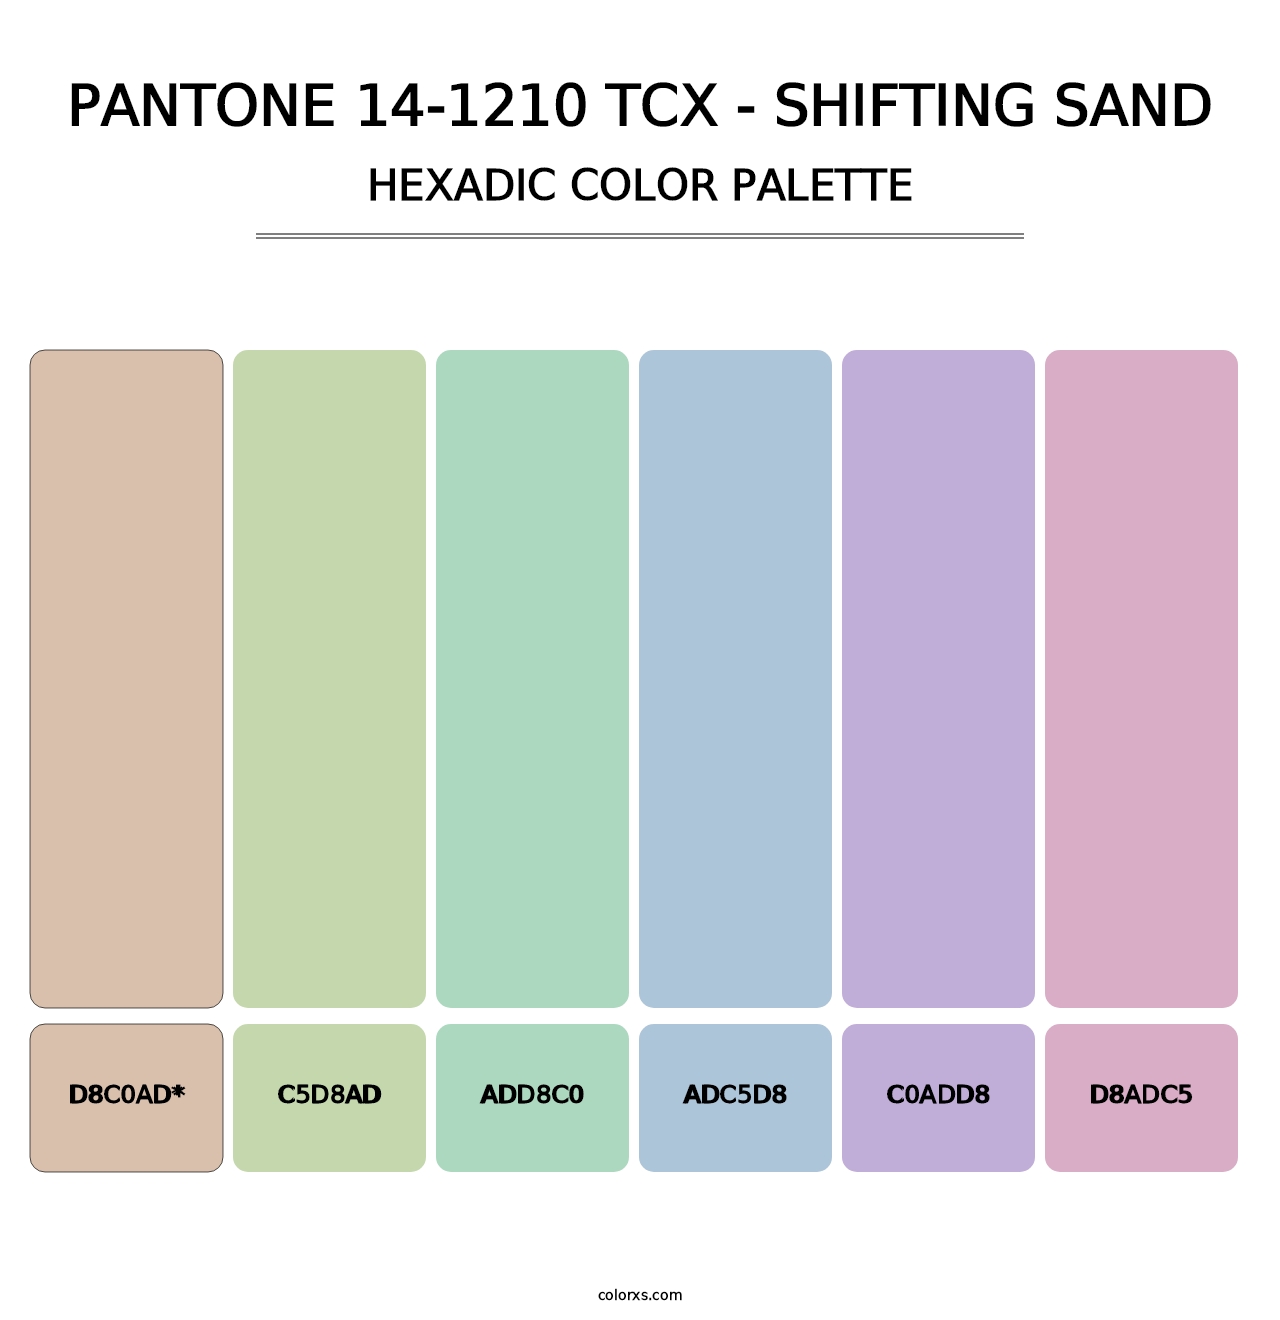 PANTONE 14-1210 TCX - Shifting Sand - Hexadic Color Palette